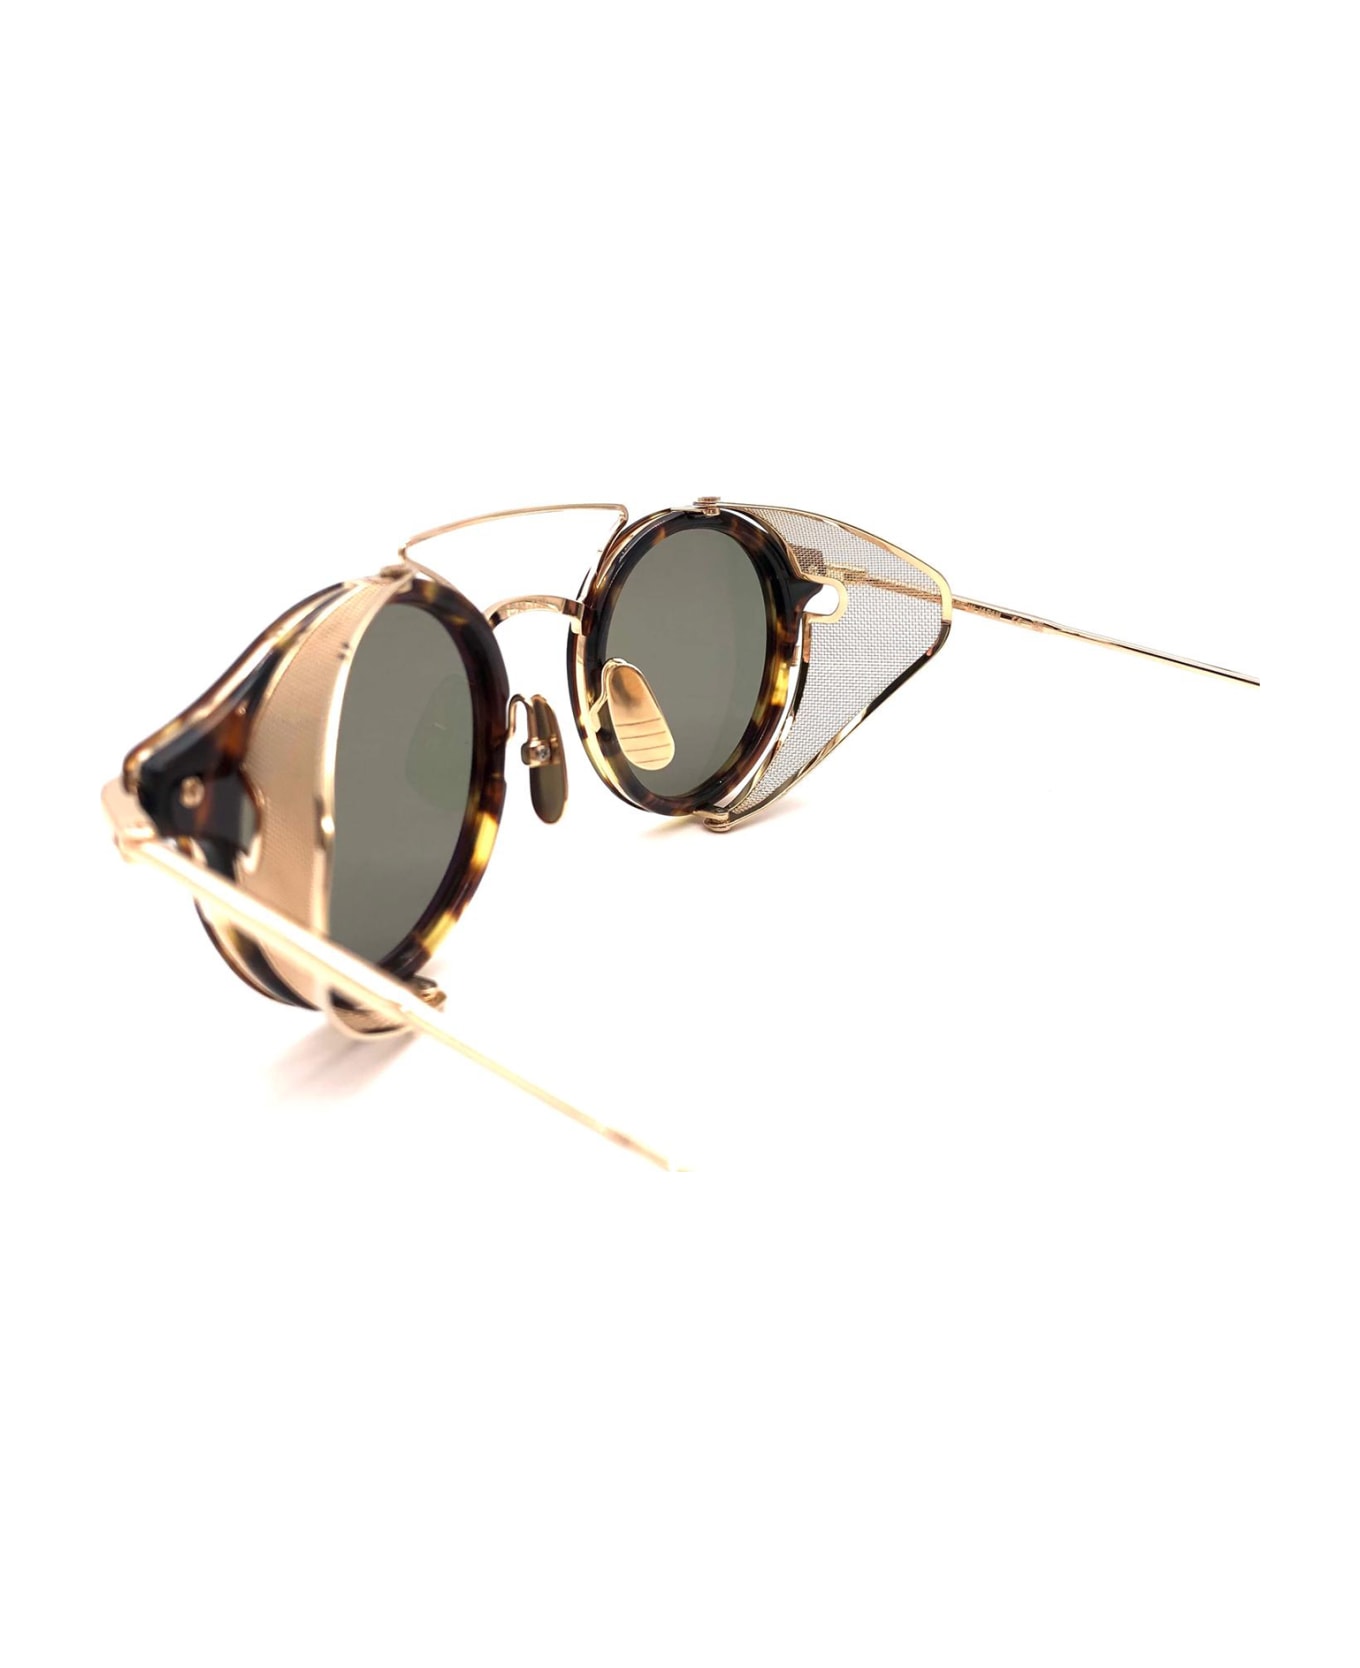 Thom Browne Ues804a/g0003 Sunglasses - tortoise/gold